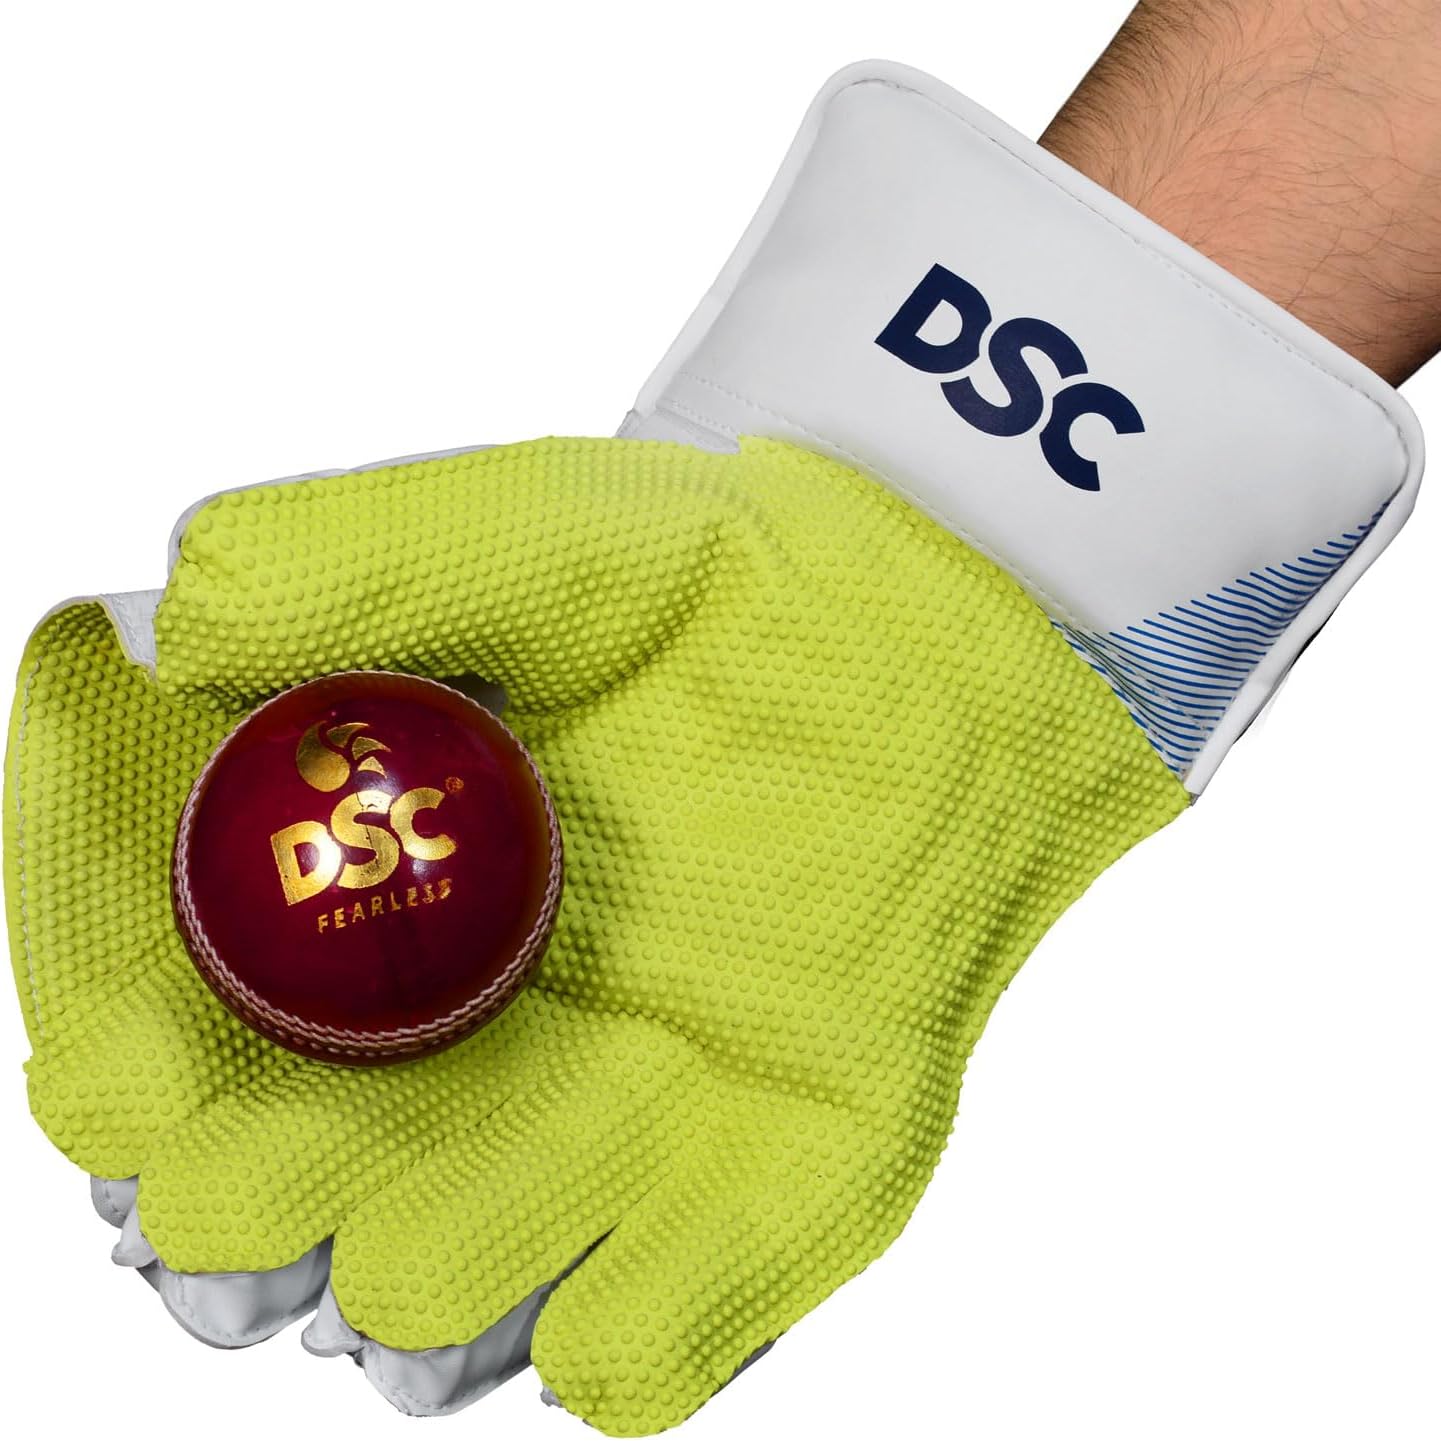 DSC Intense Attitude Wicket keeping Gloves - Mens (Multicolour)